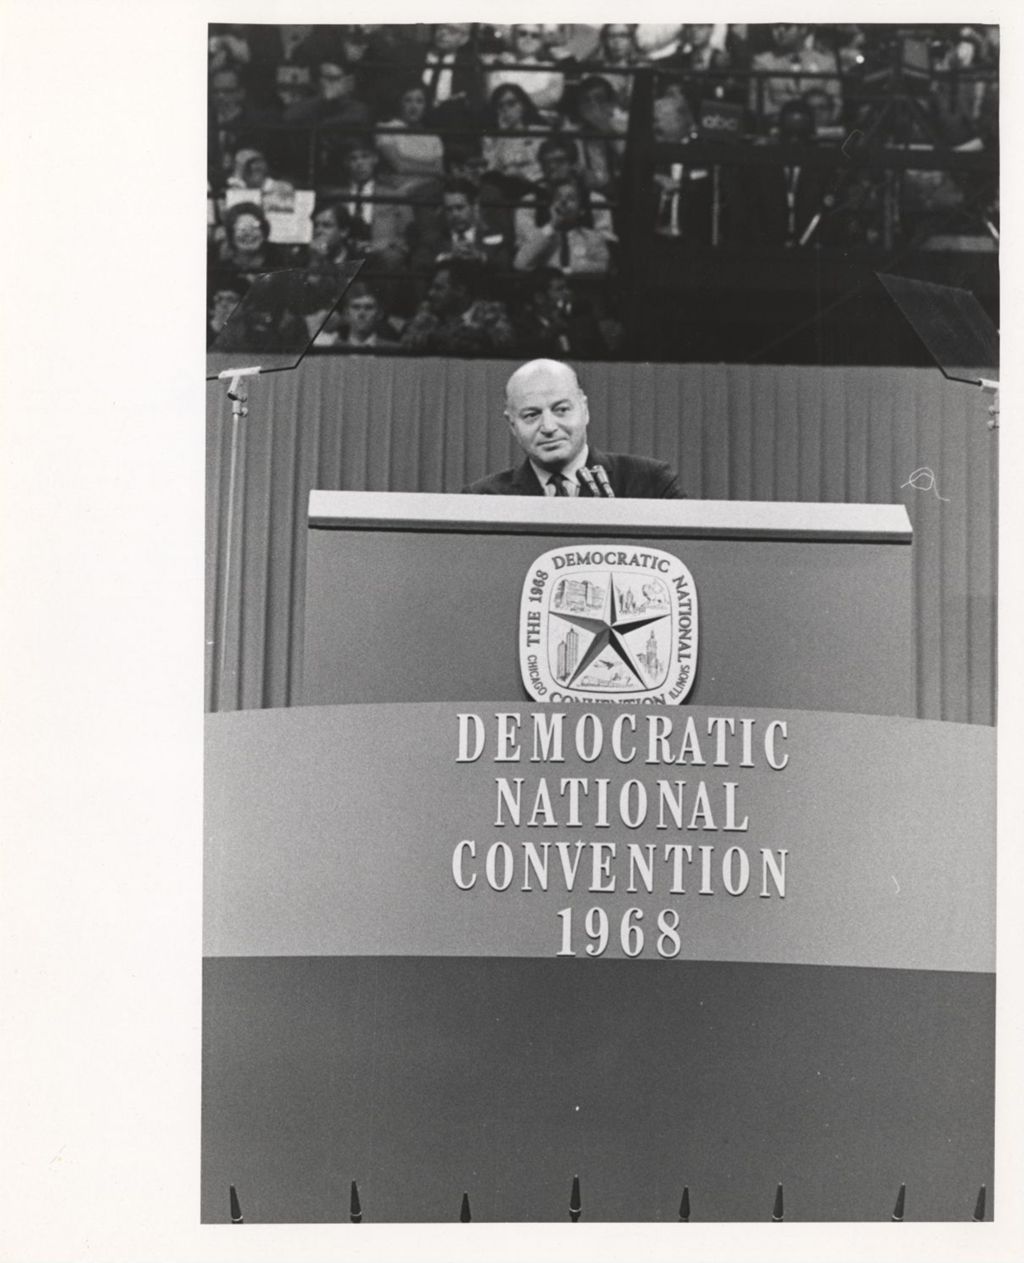 Joseph Alioto at the Democratic National Convention